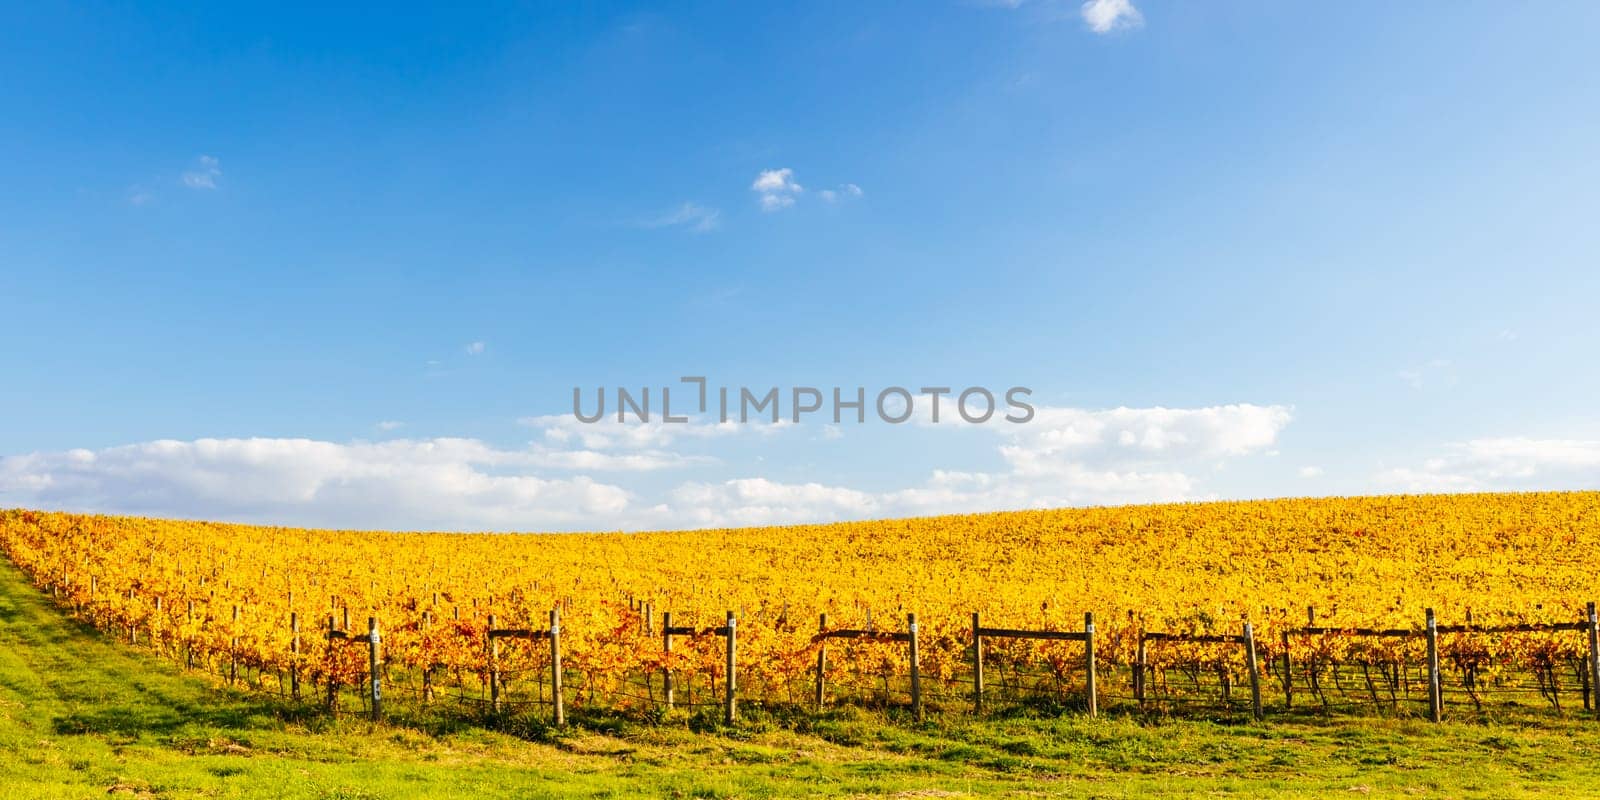 Late afternoon autumn sun over vines in the Yarra Valley near Yarra Glen, Victoria, Australia